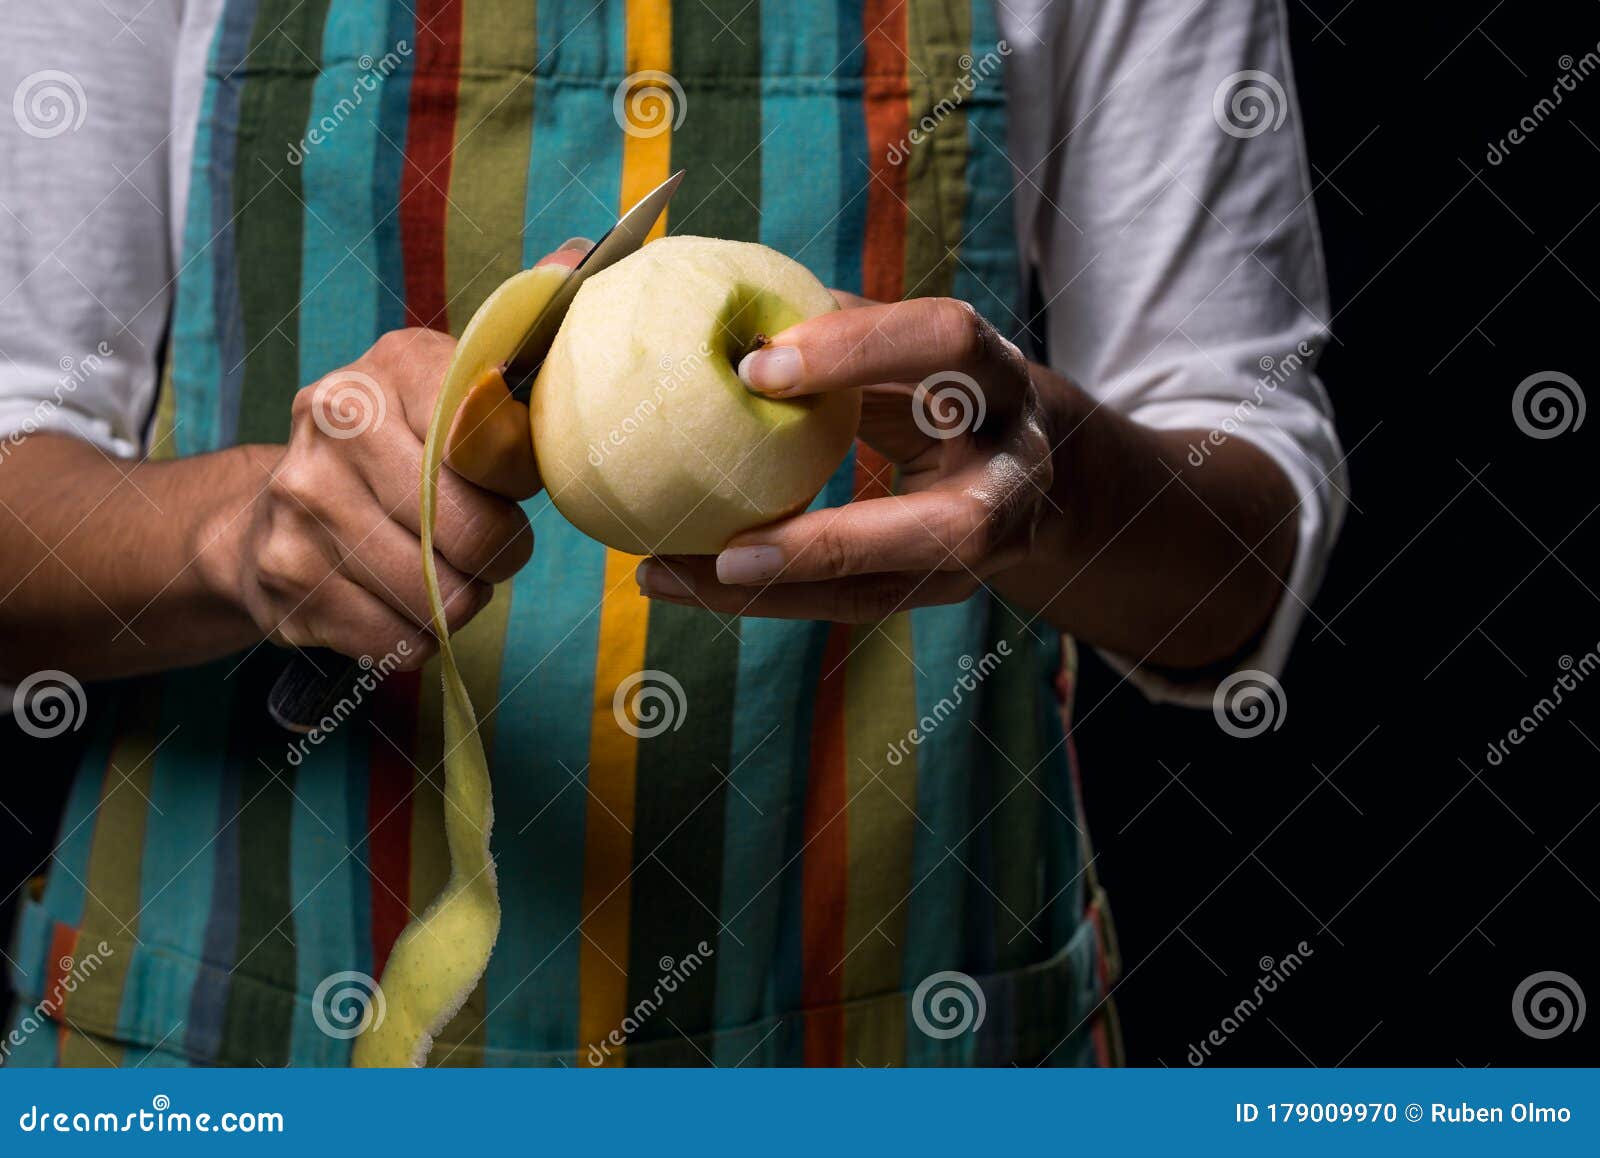 woman in colored apron peeling apple. dark black background